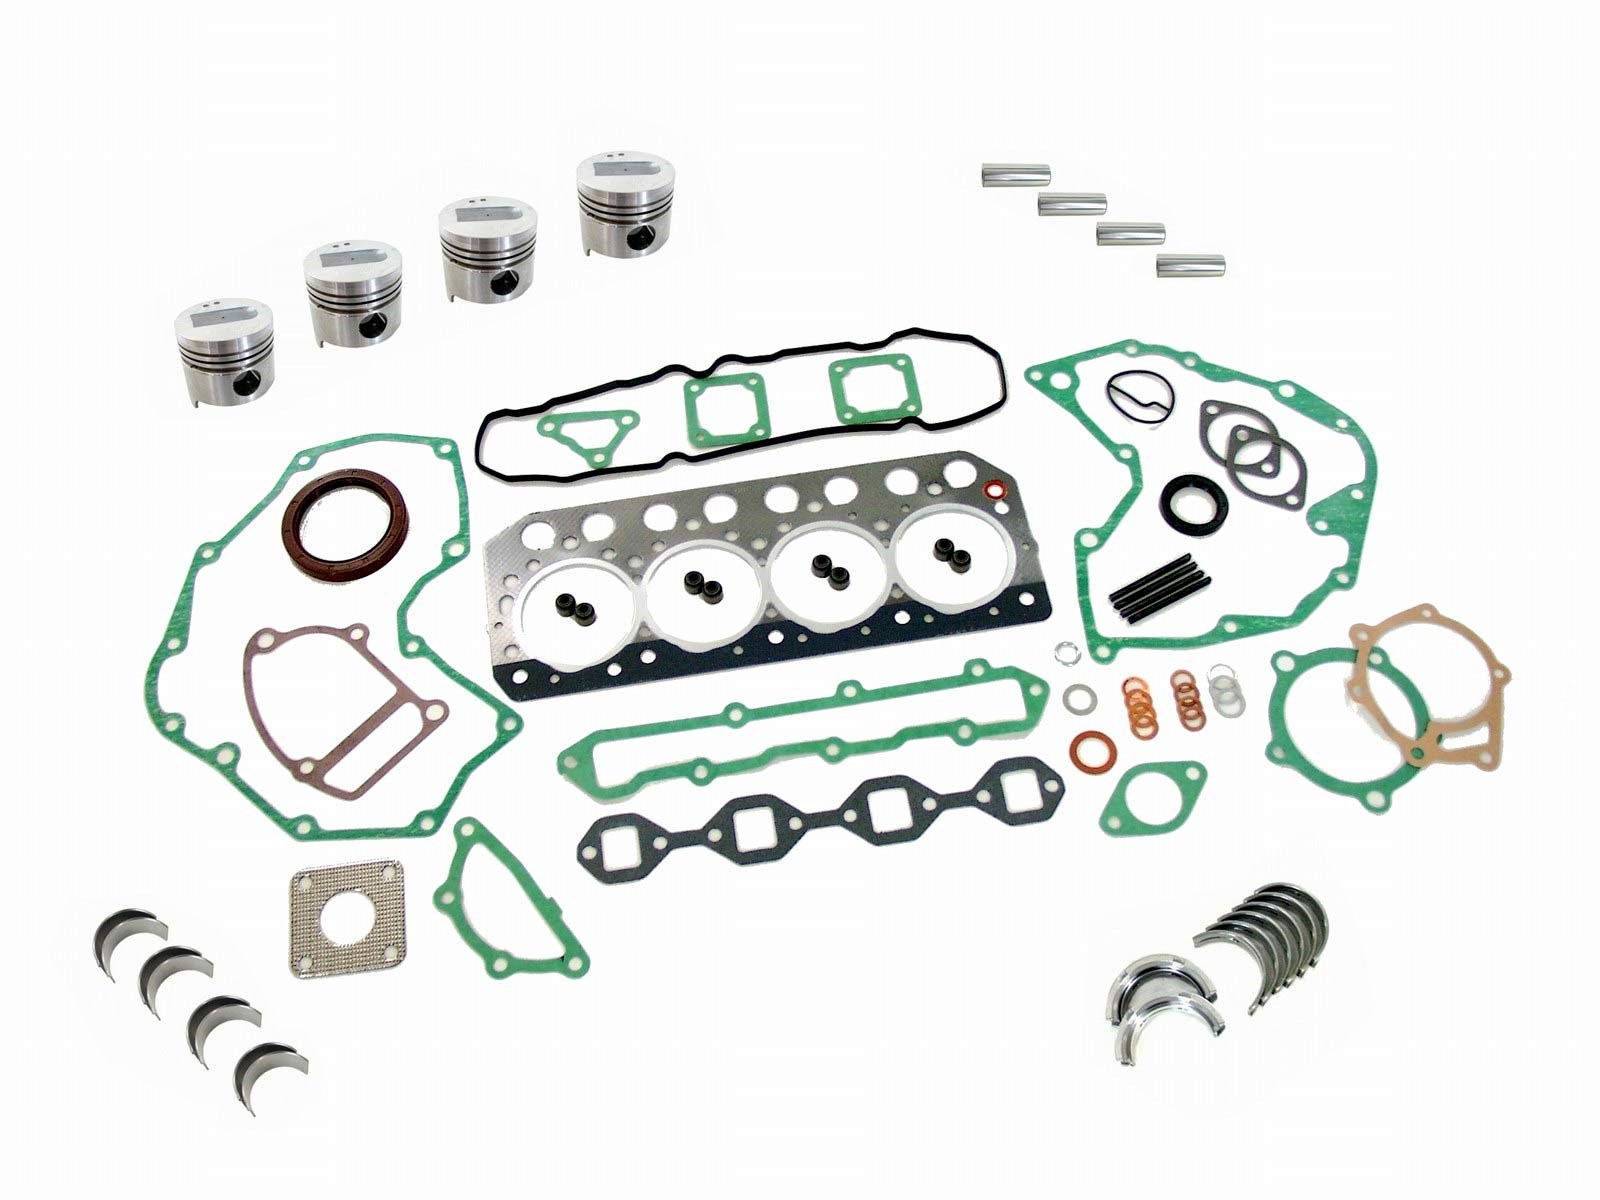 Reparatur-Kit-für-Mitsubishi-Motor-Typ-S4L.jpg